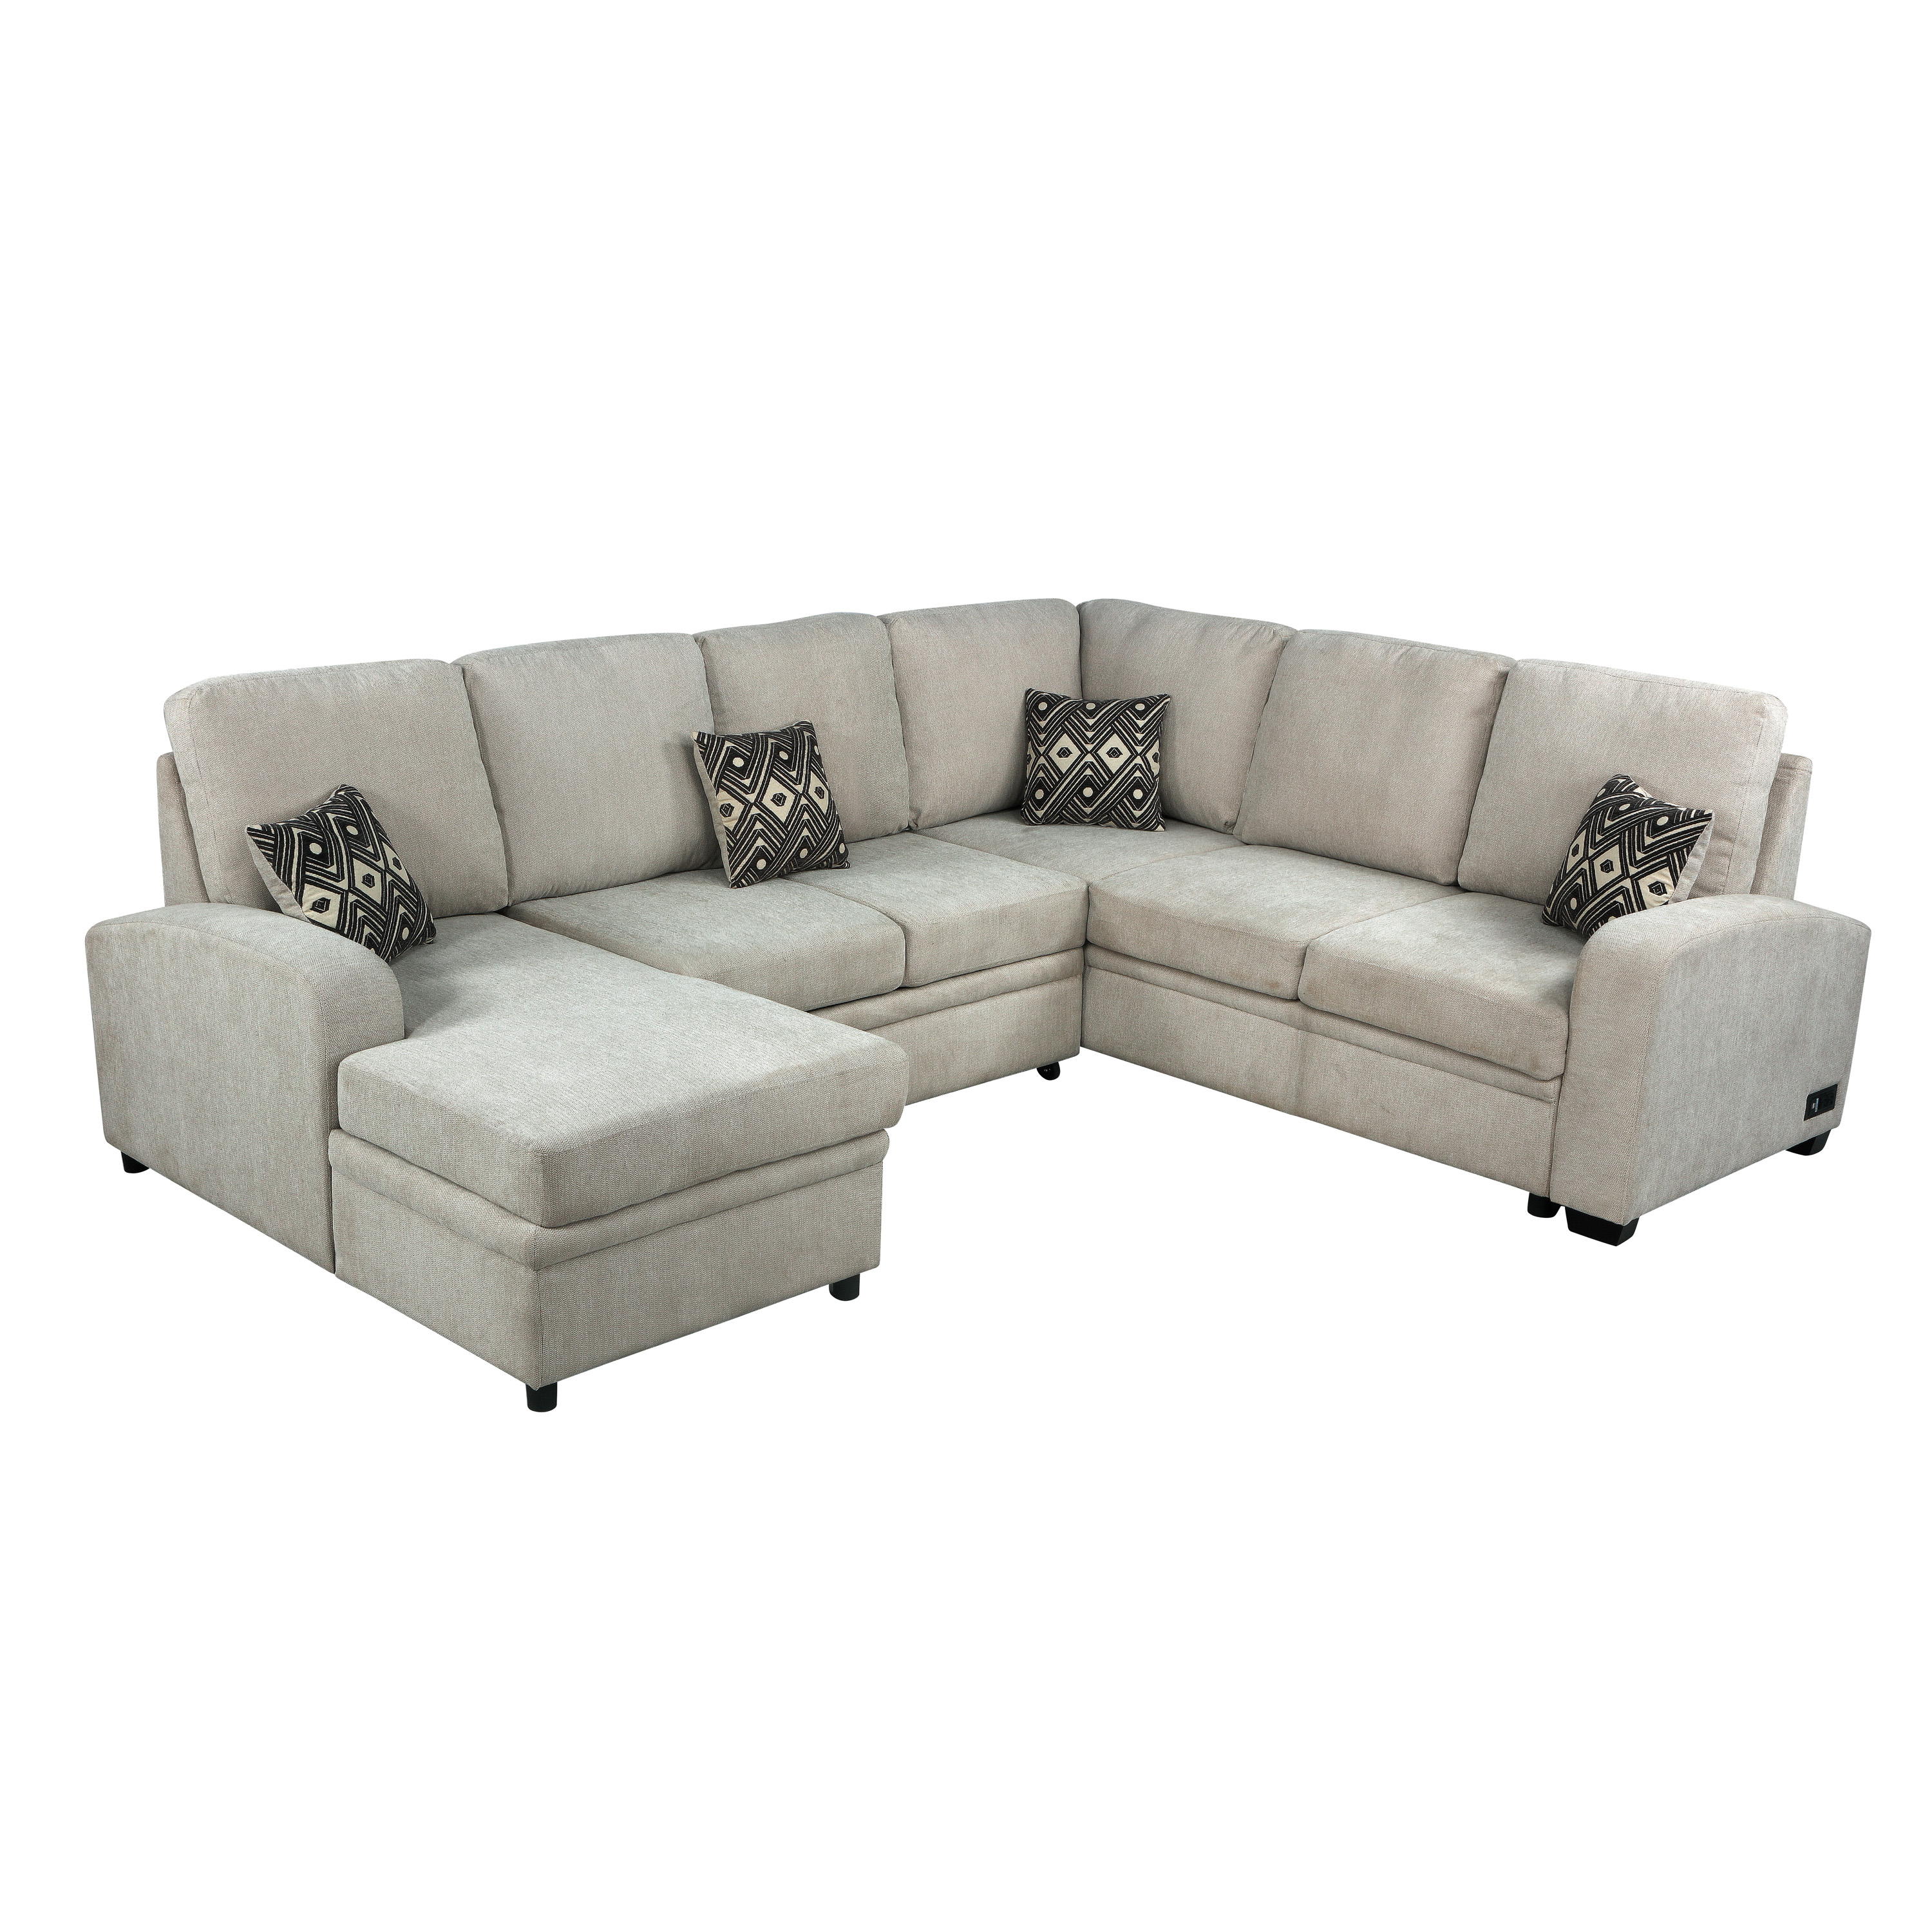 Serta Blair Multifunctional Indoor Sectional Sofa with USB & Power, Beige - image 3 of 11